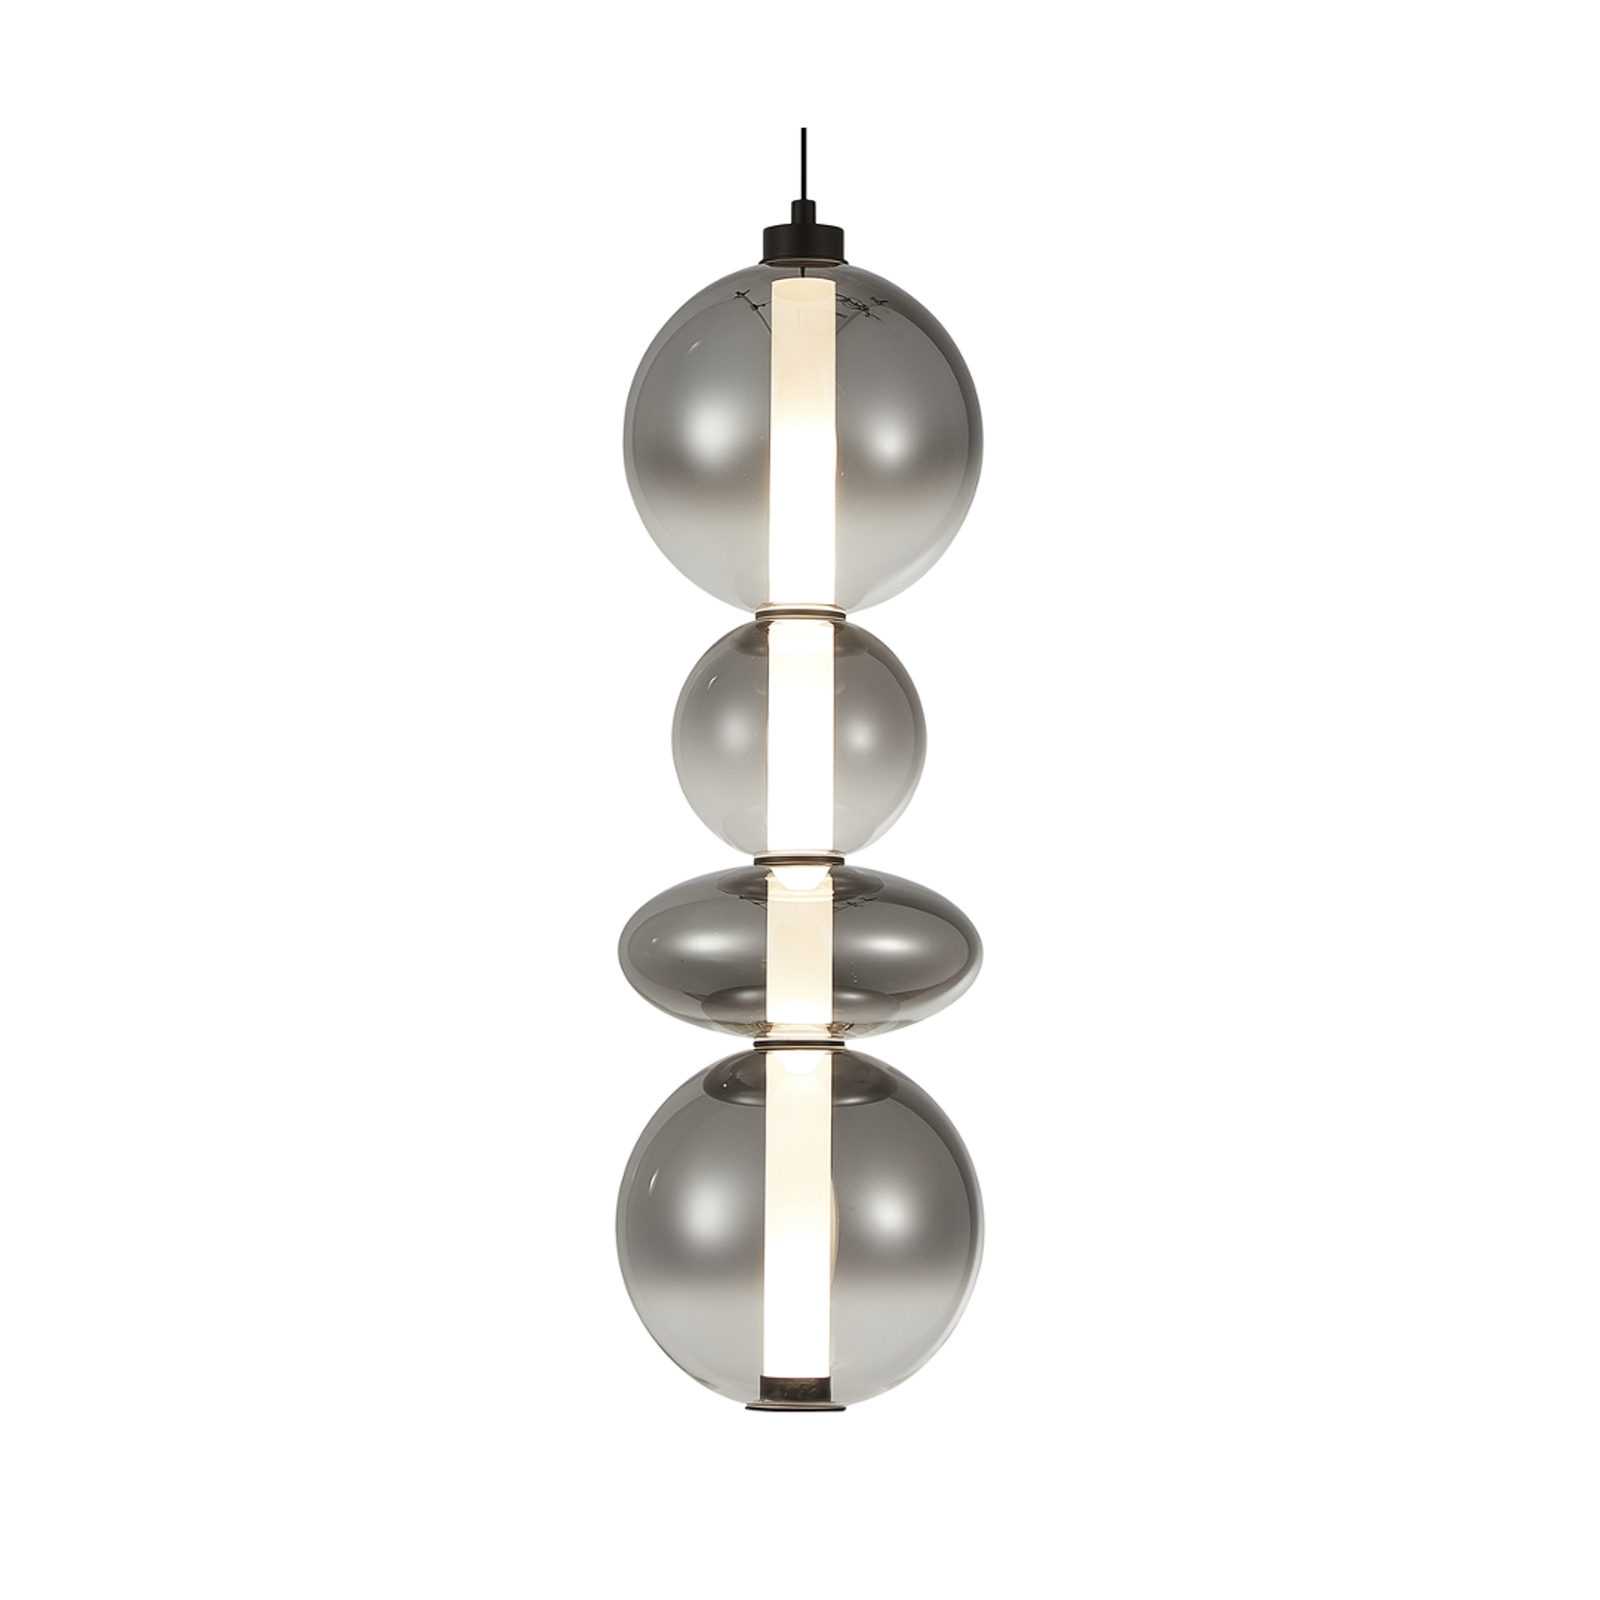 LED pendant light Daphne, grey-transparent glass, height 62 cm